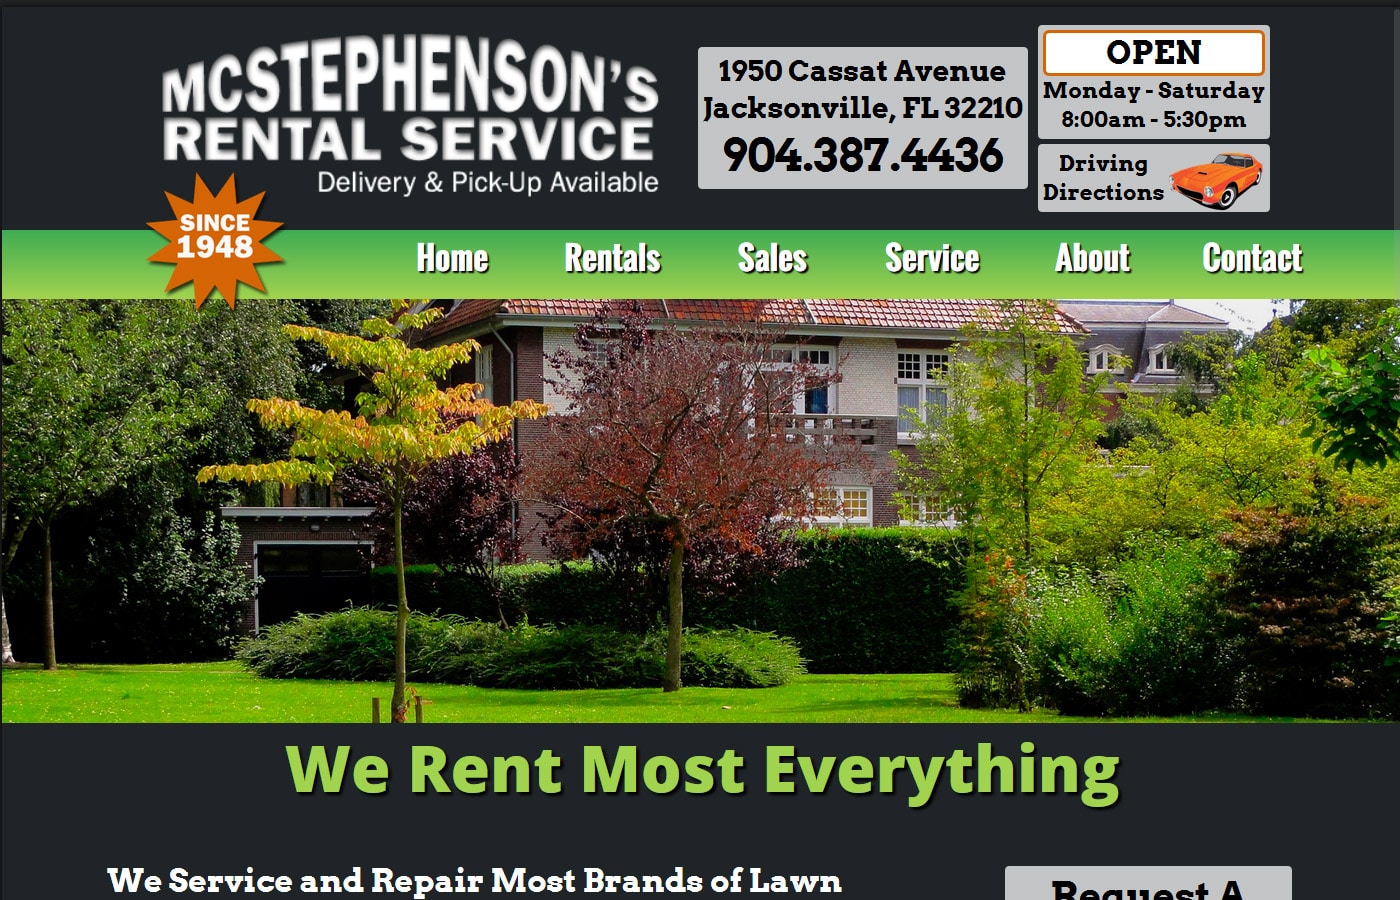 McStephenson's Rental Service